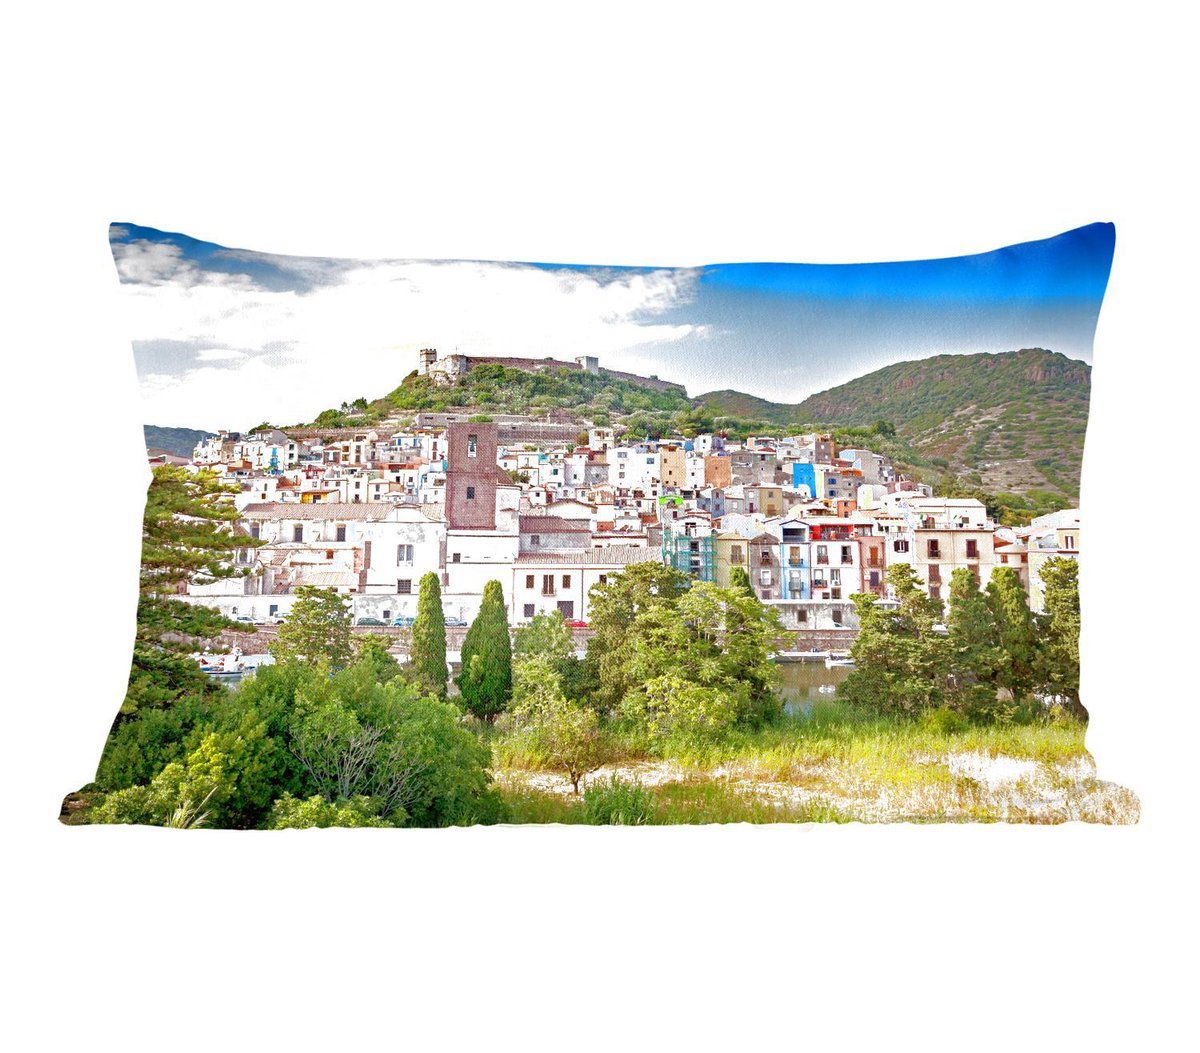 Sierkussens - Kussen - Gekleurde huizen in Oristano in Sardinië - 50x30 cm - Kussen van katoen - PillowMonkey